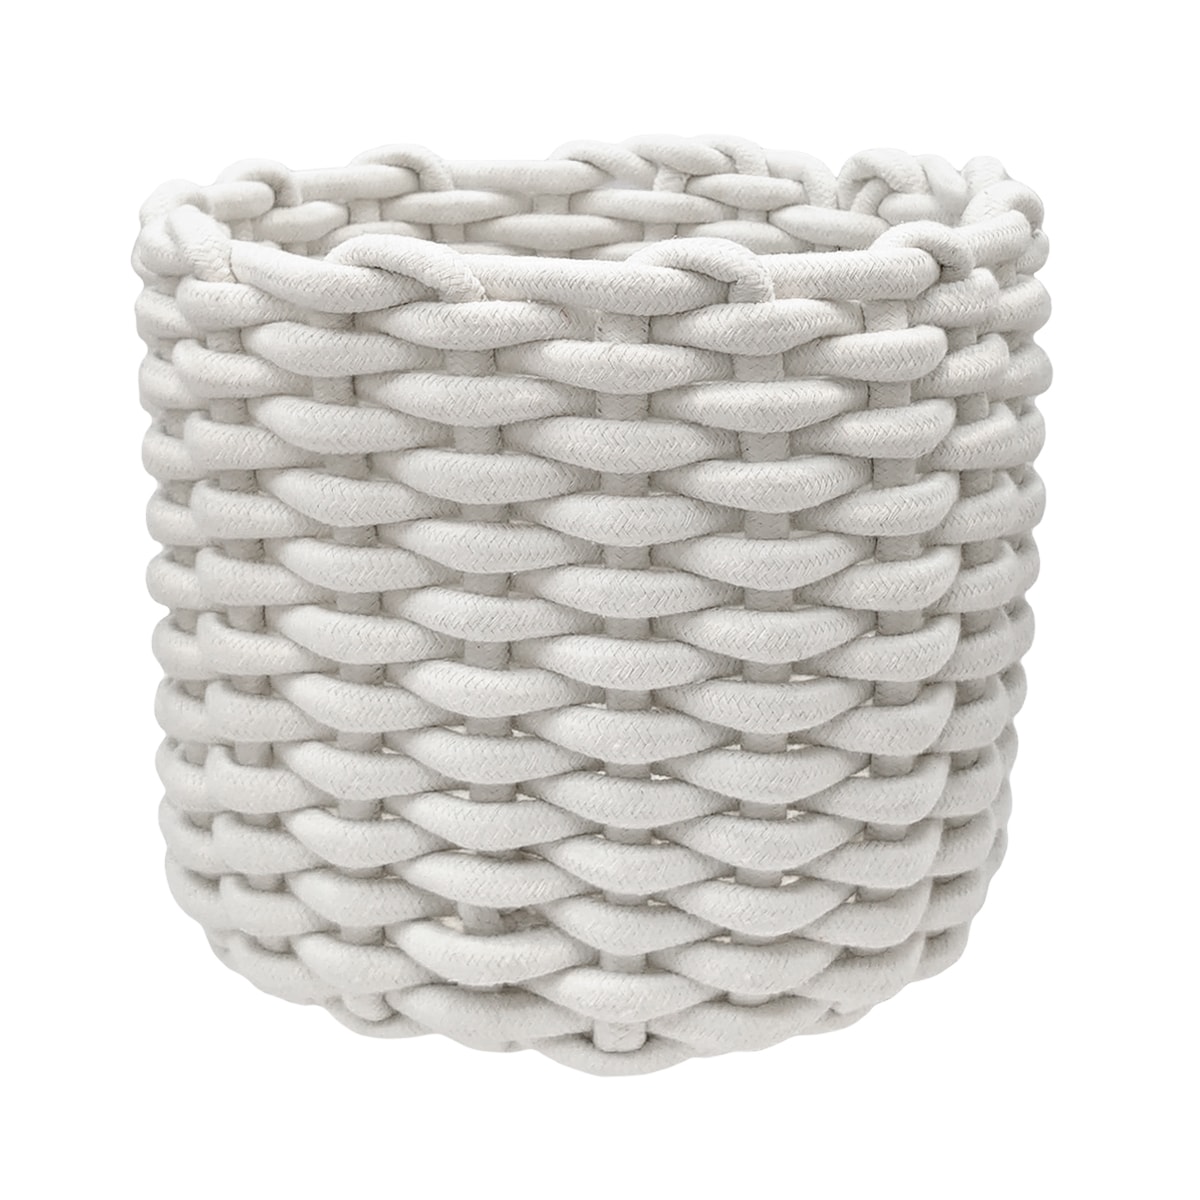 Origin 21 Coiled rope bin 12-in W x 10-in H x 12-in D White